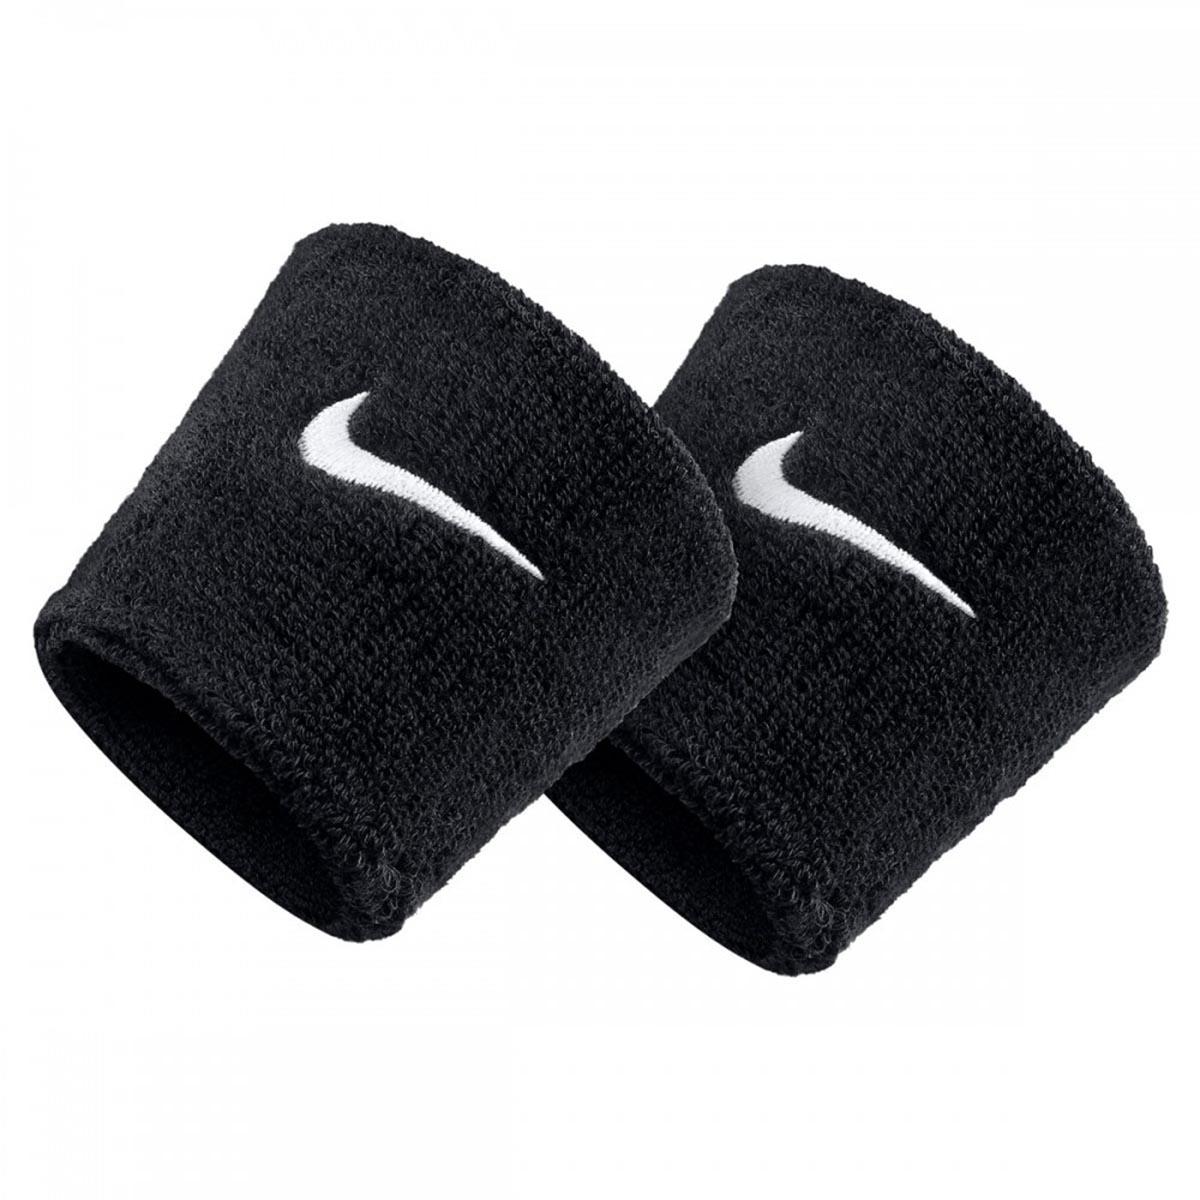 Buy Nike Wristband Online India|Nike Tennis Accessories